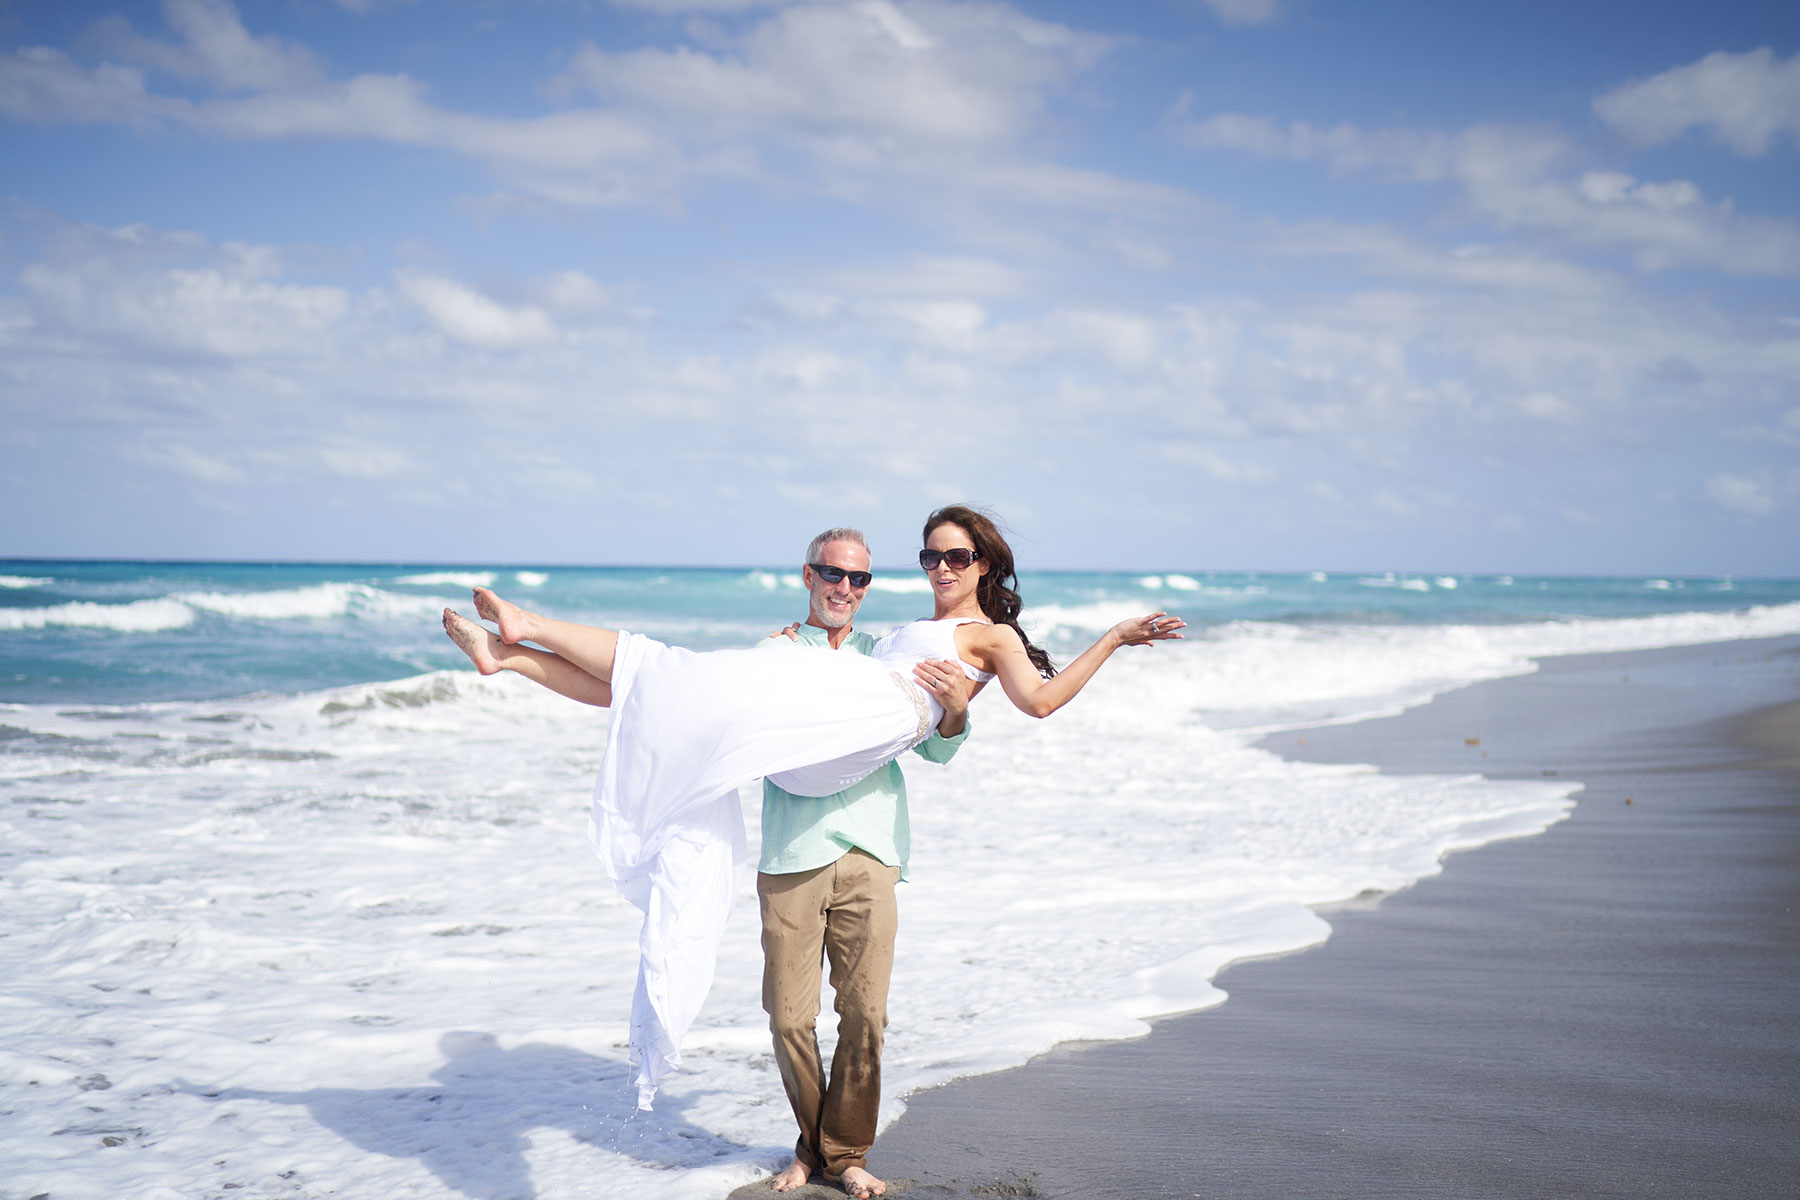 Spring-Bride-on-beach-in-arms-of-groom